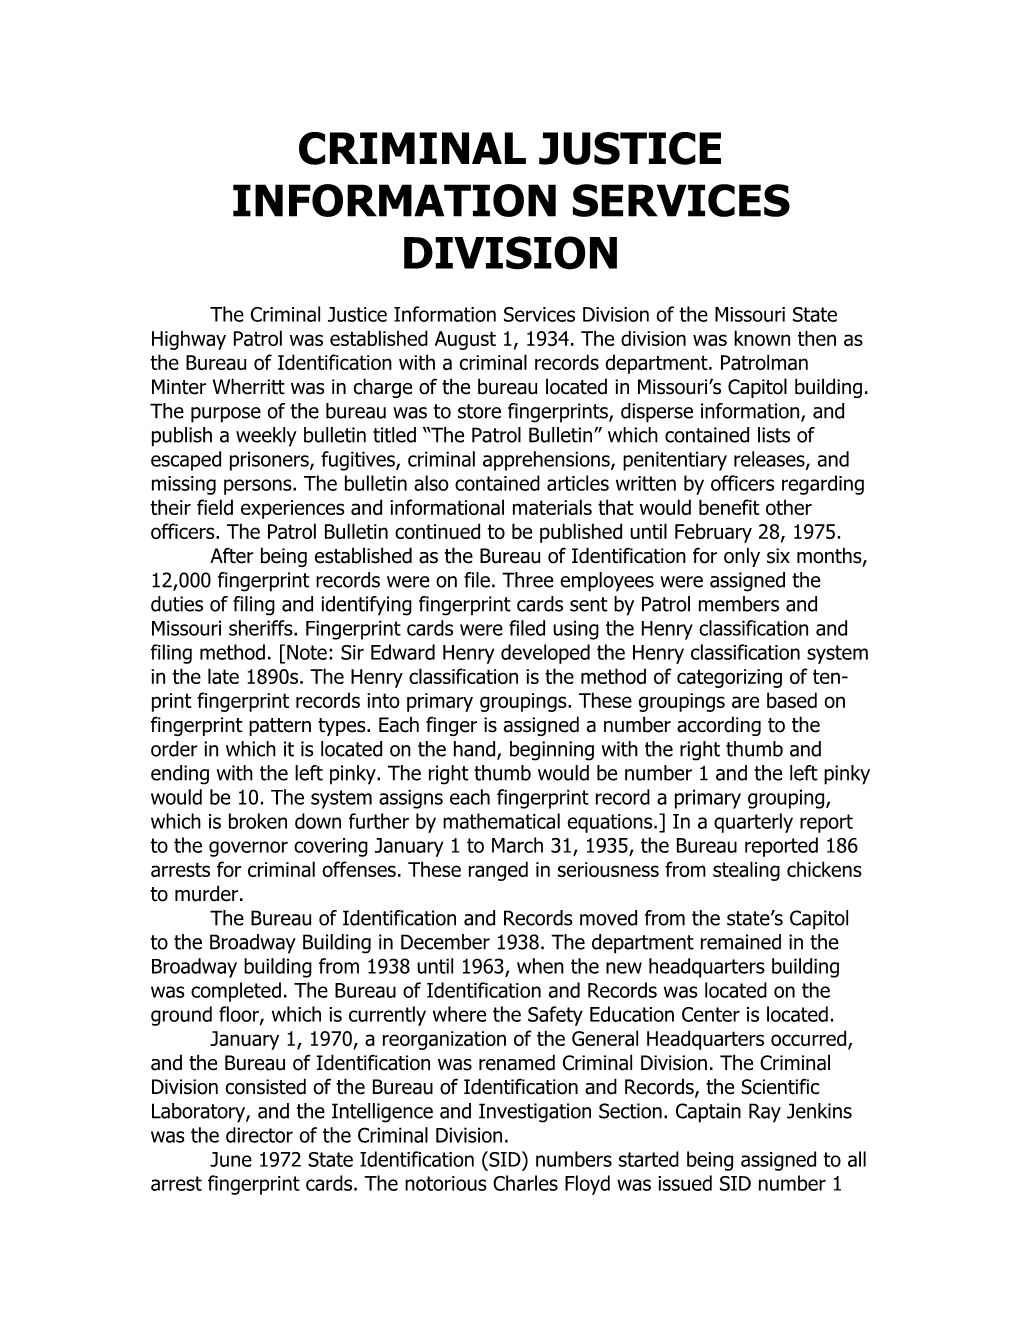 Criminal Justice Information Services Division